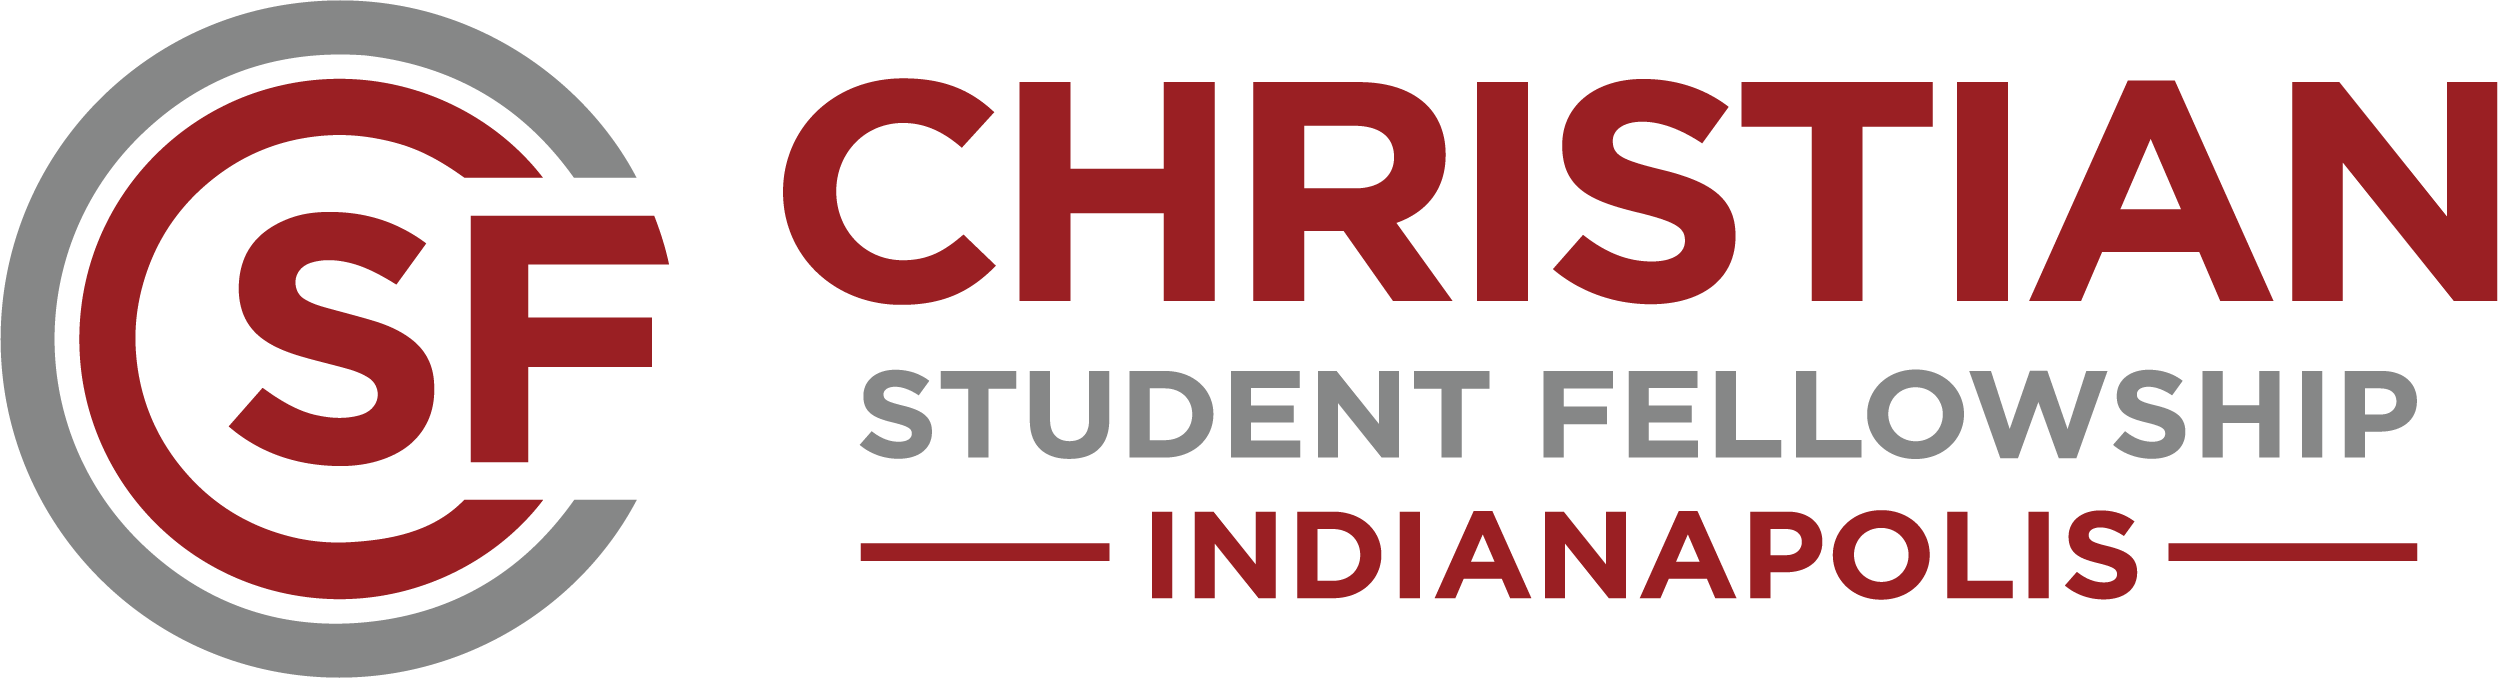 Christian Student Fellowship Indianapolis